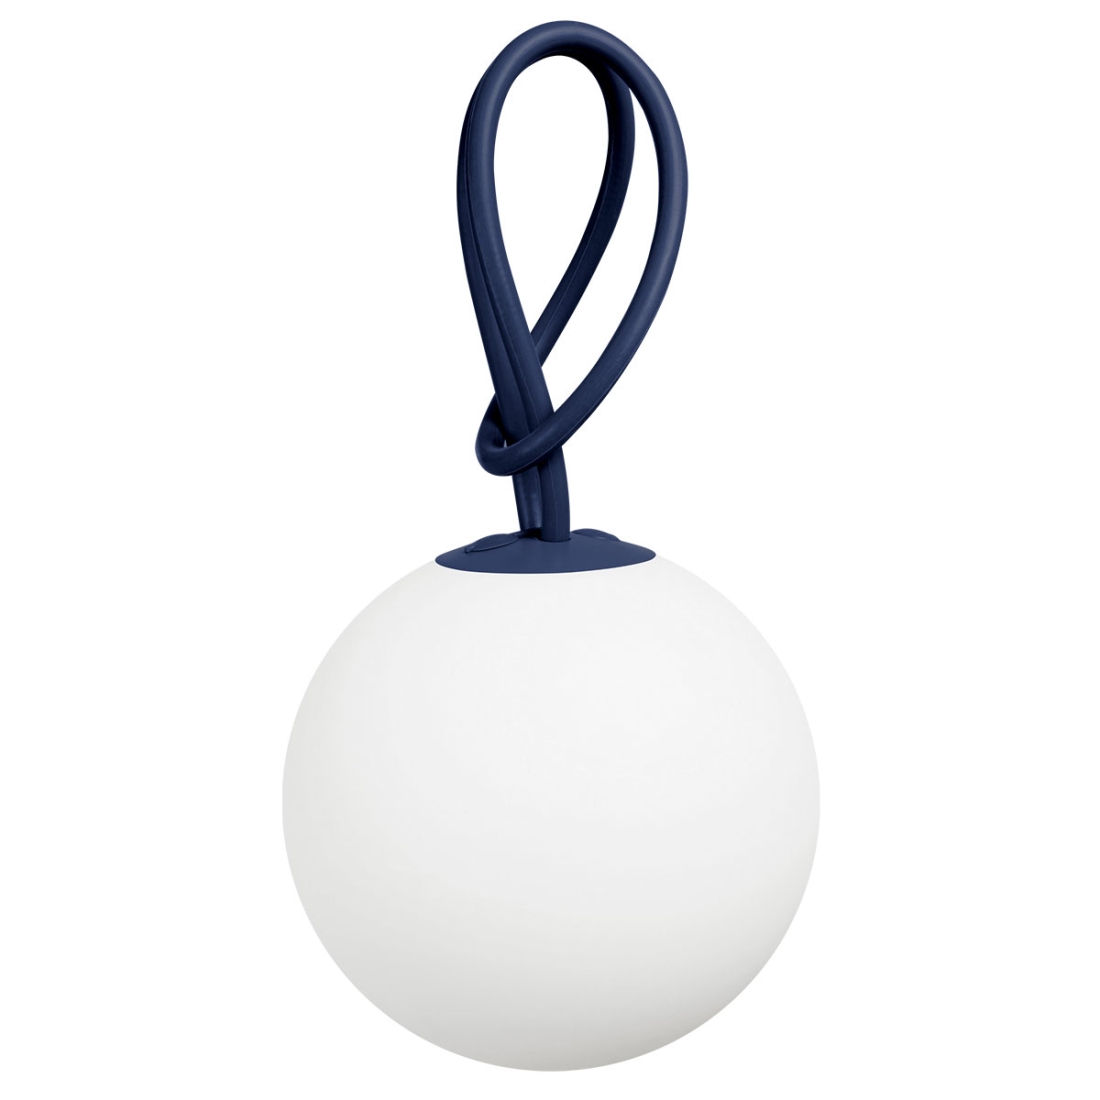 Fatboy® Hanging lamp Bolleke F49-bolleke FATBOY THE ORIGINAL® Lighting for Terraces & Gardens